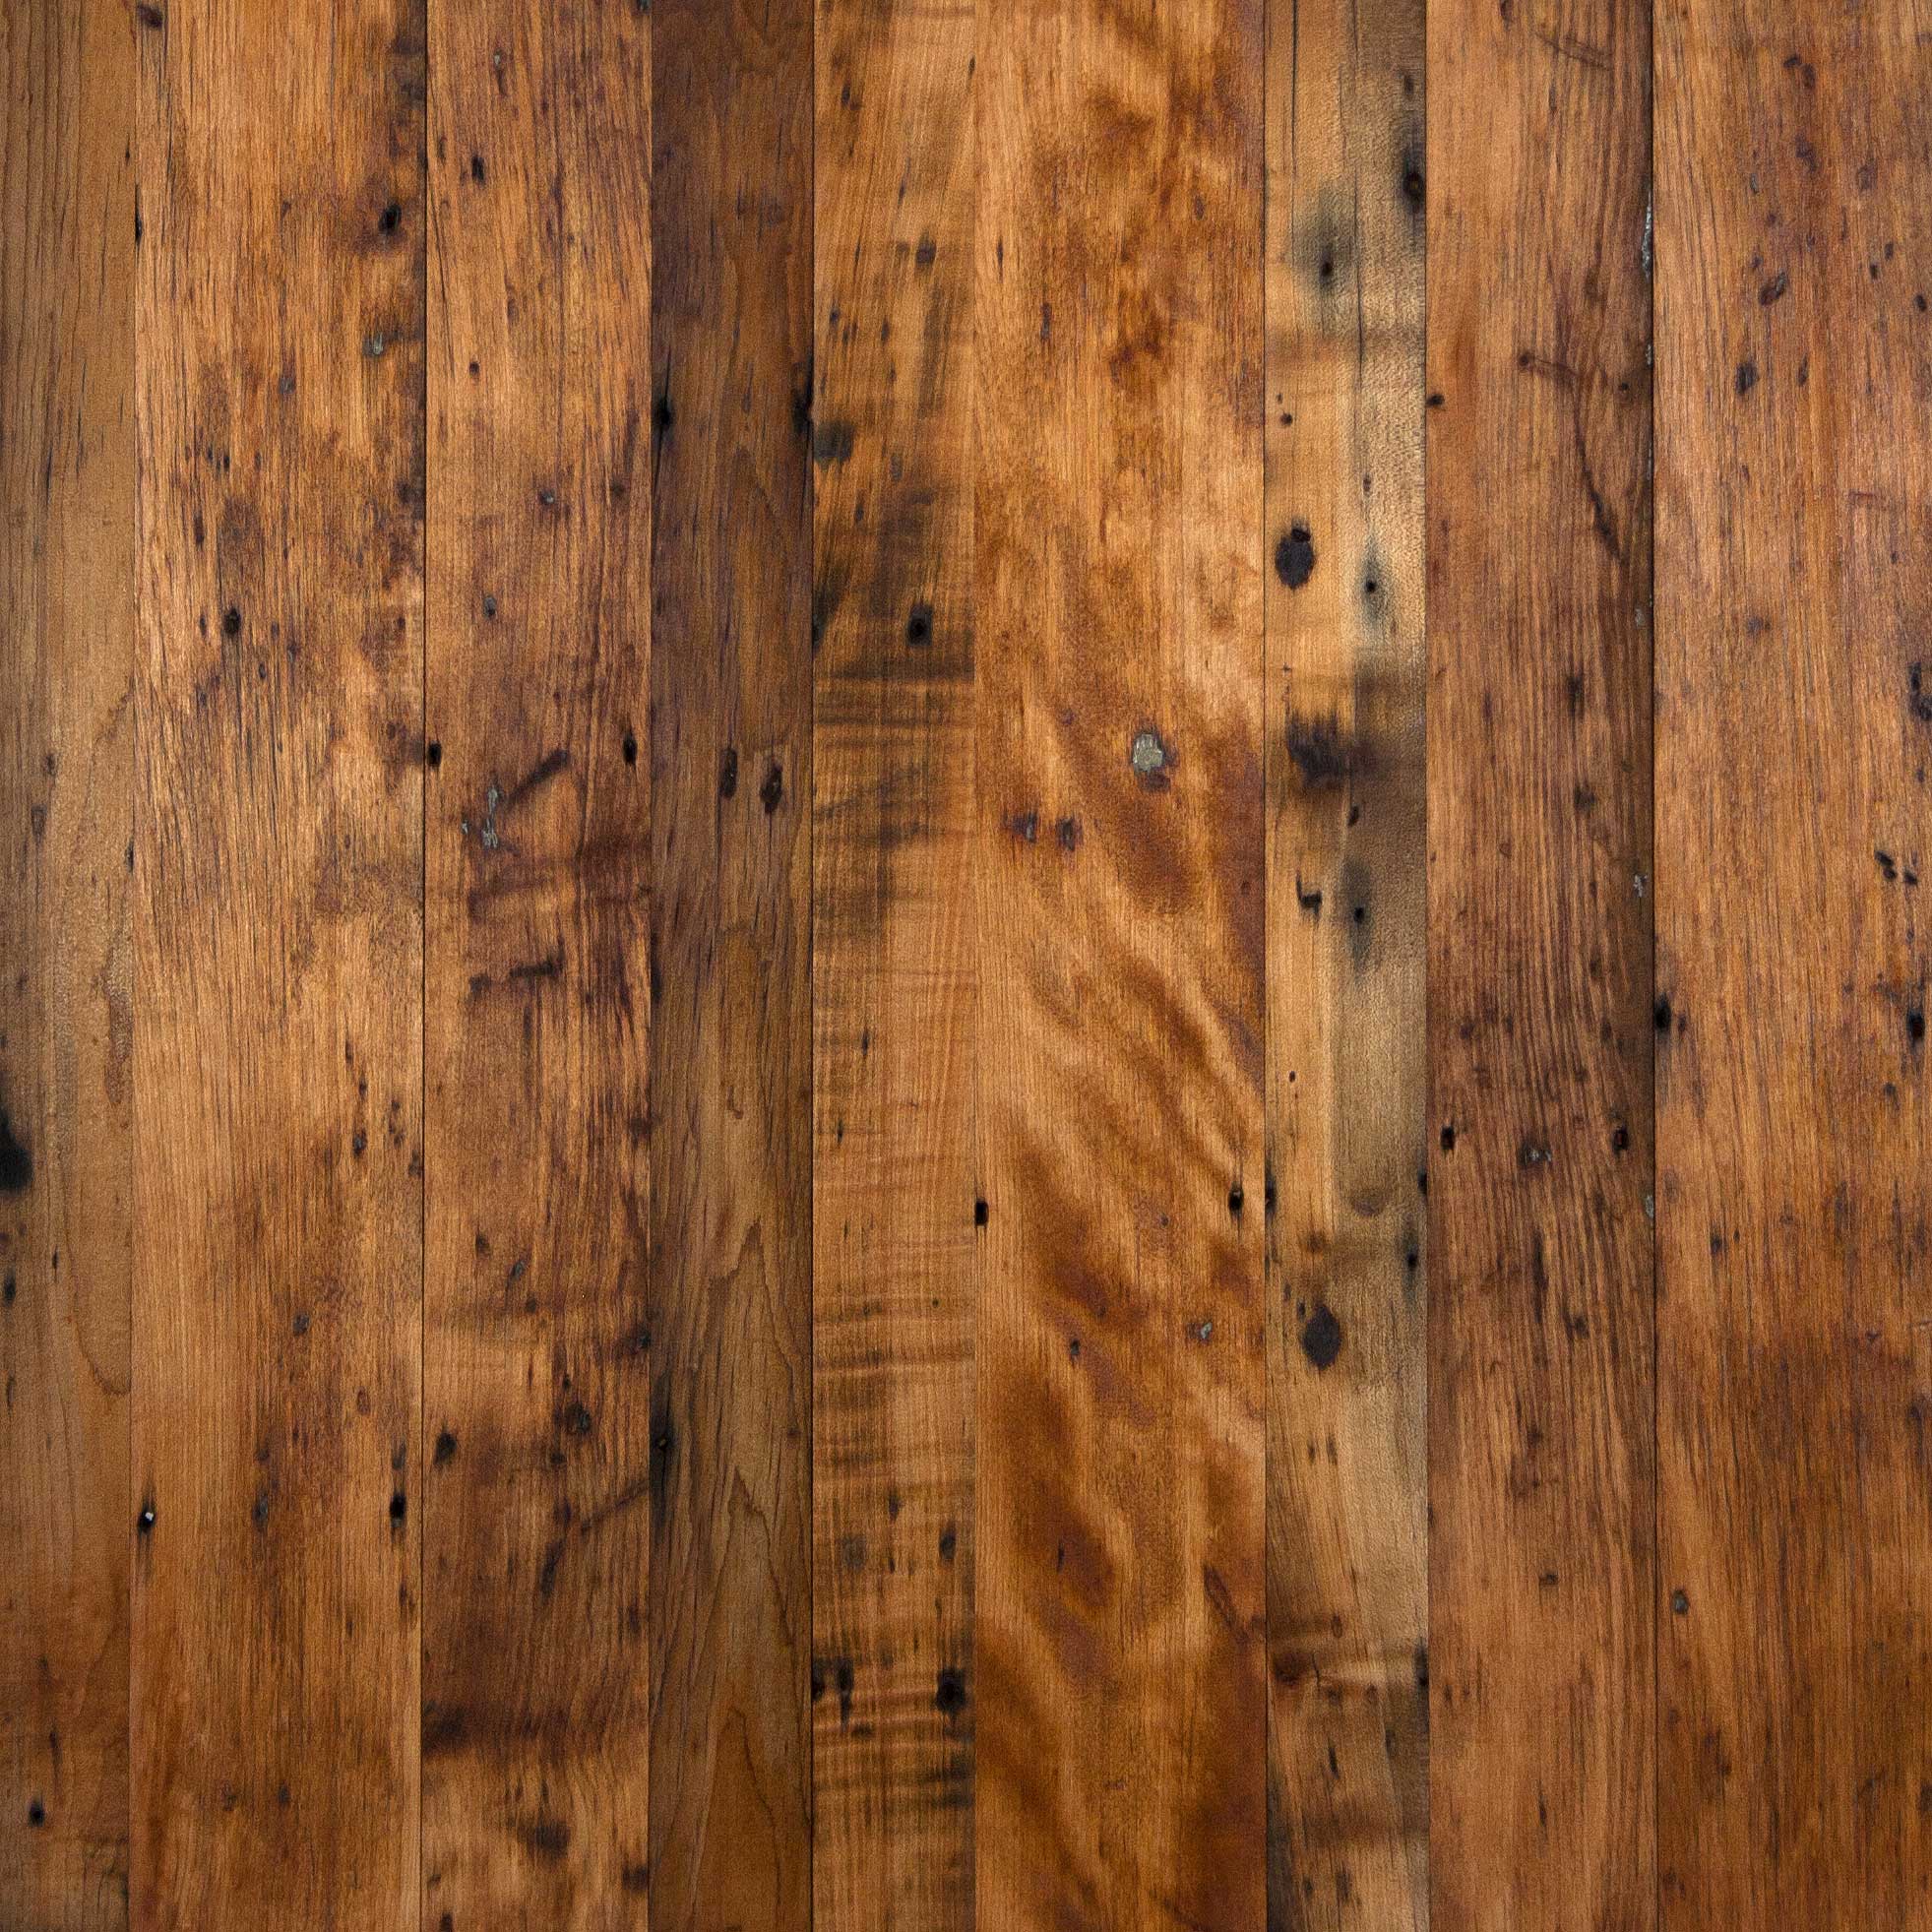 Longleaf Lumber - Reclaimed and Salvaged Maple Wood ...